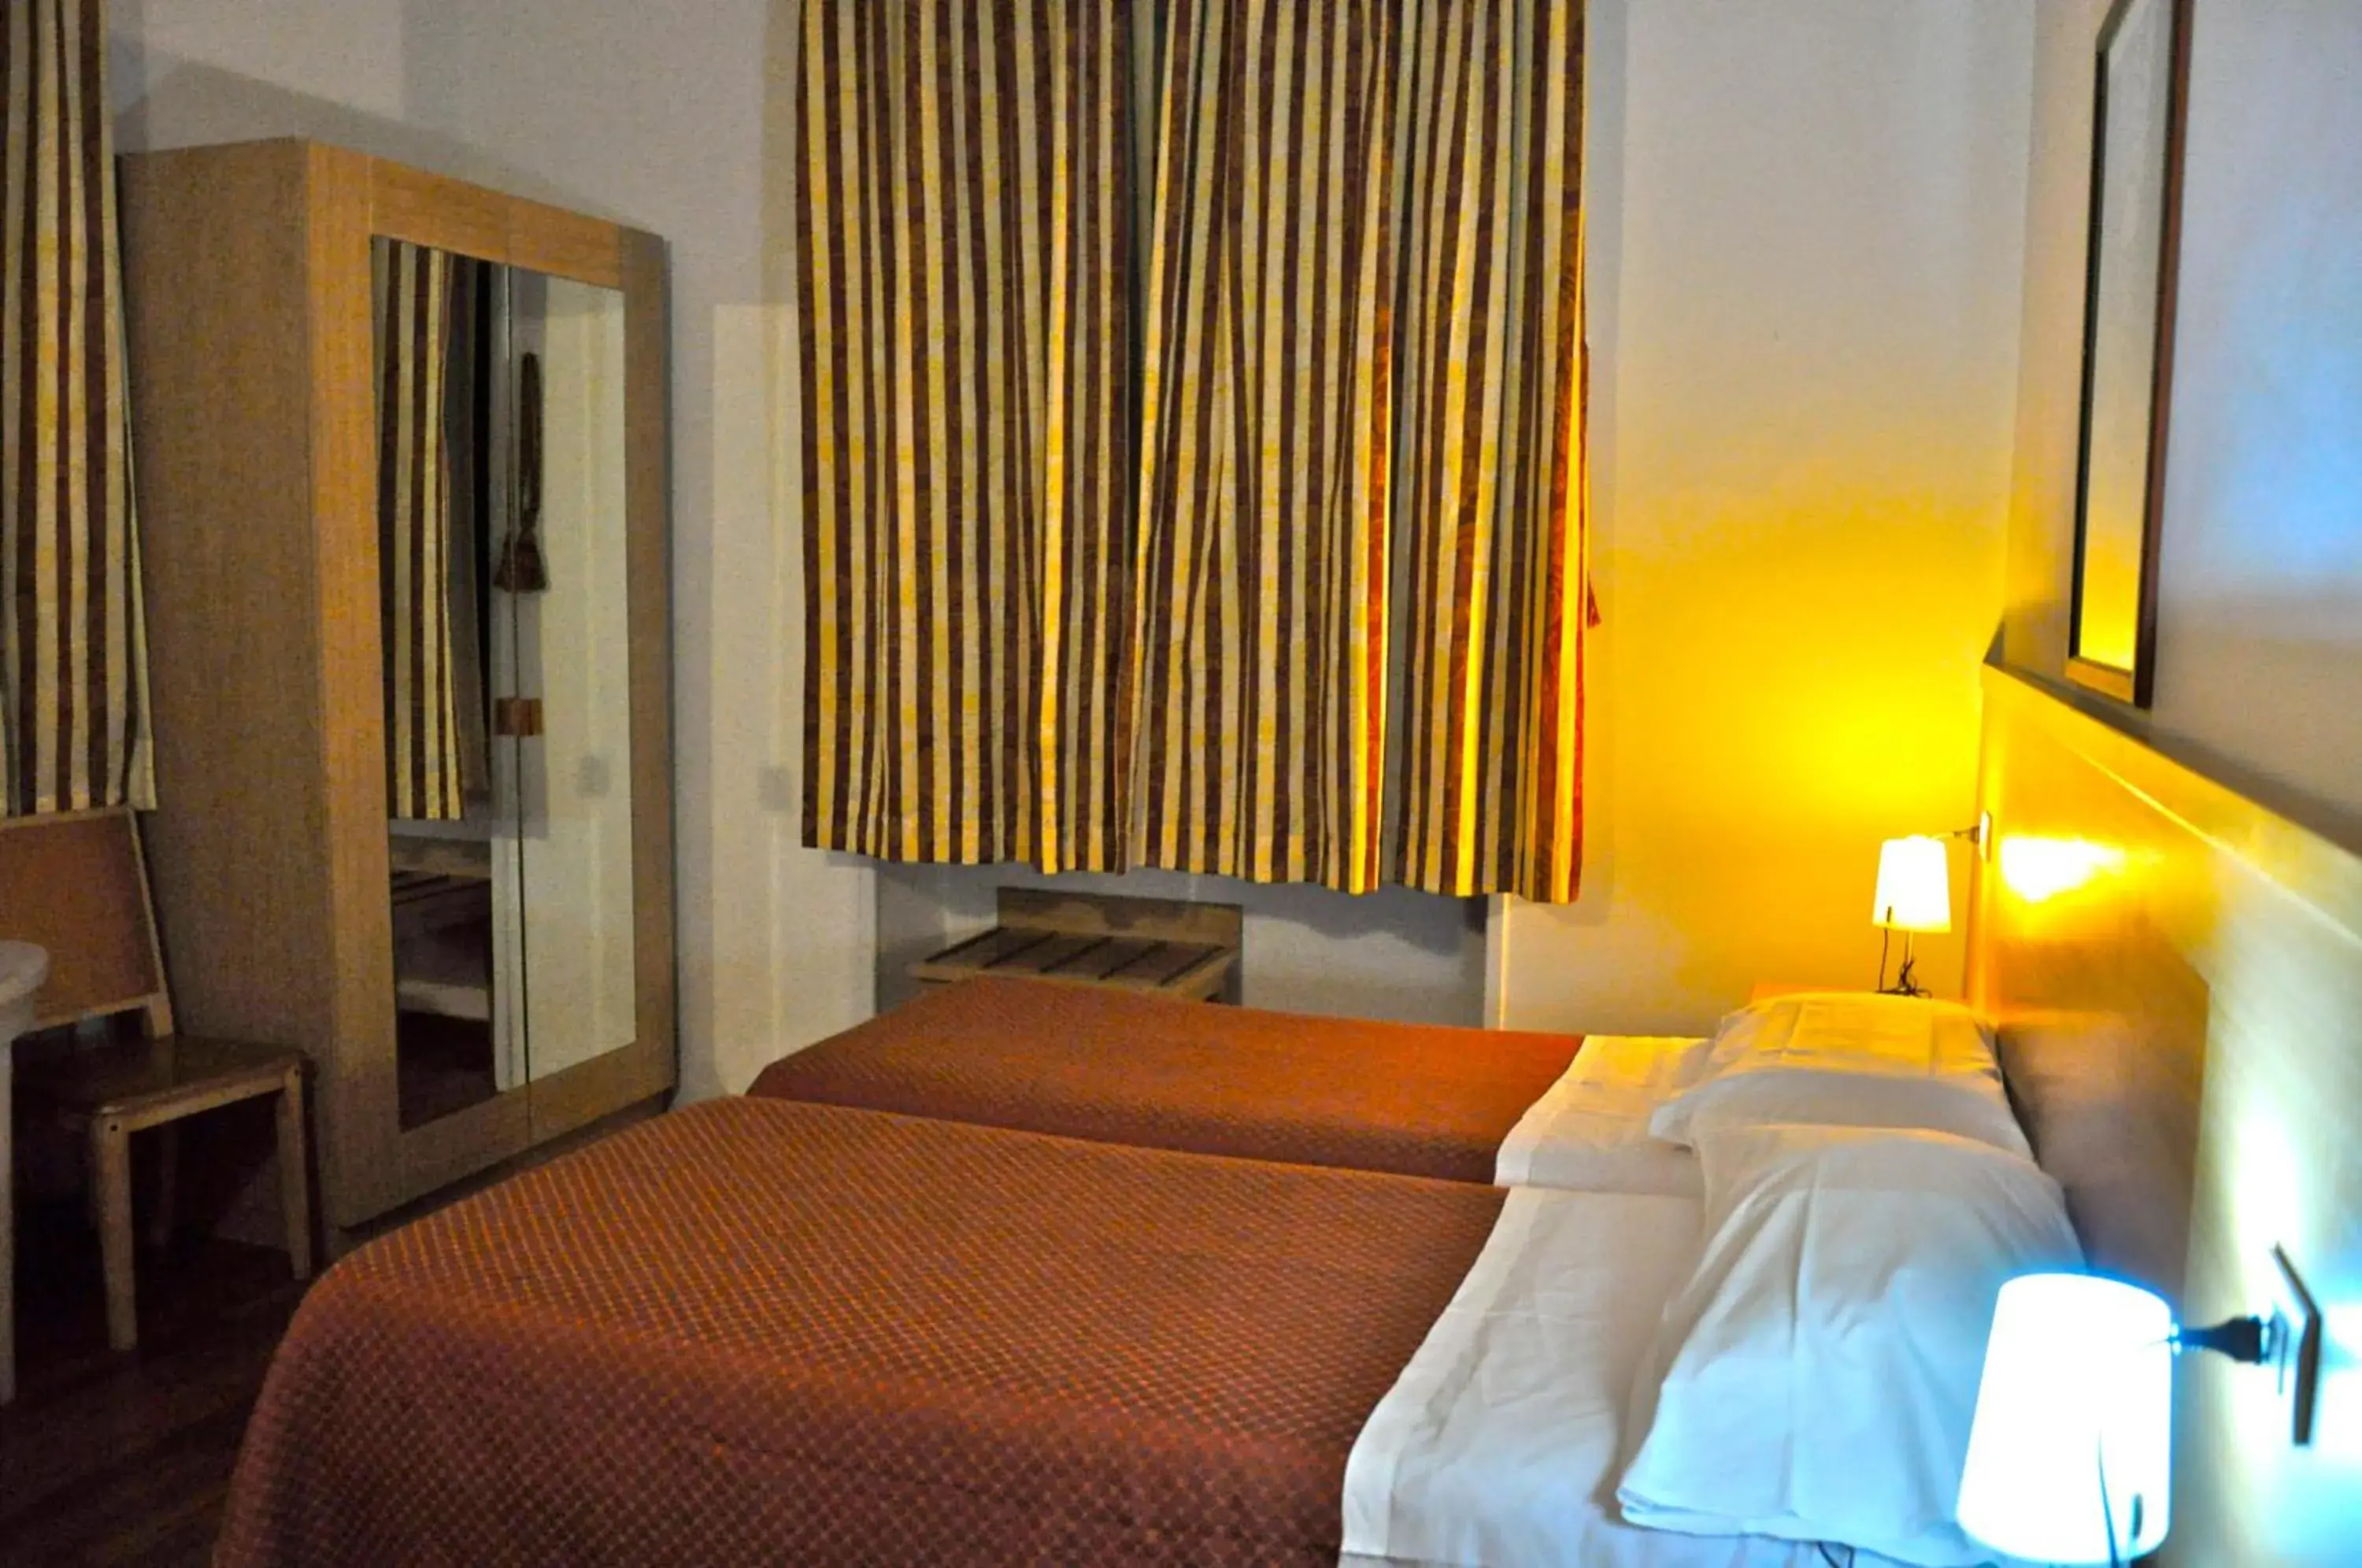 Bed, Room Photo in Hotel Dover